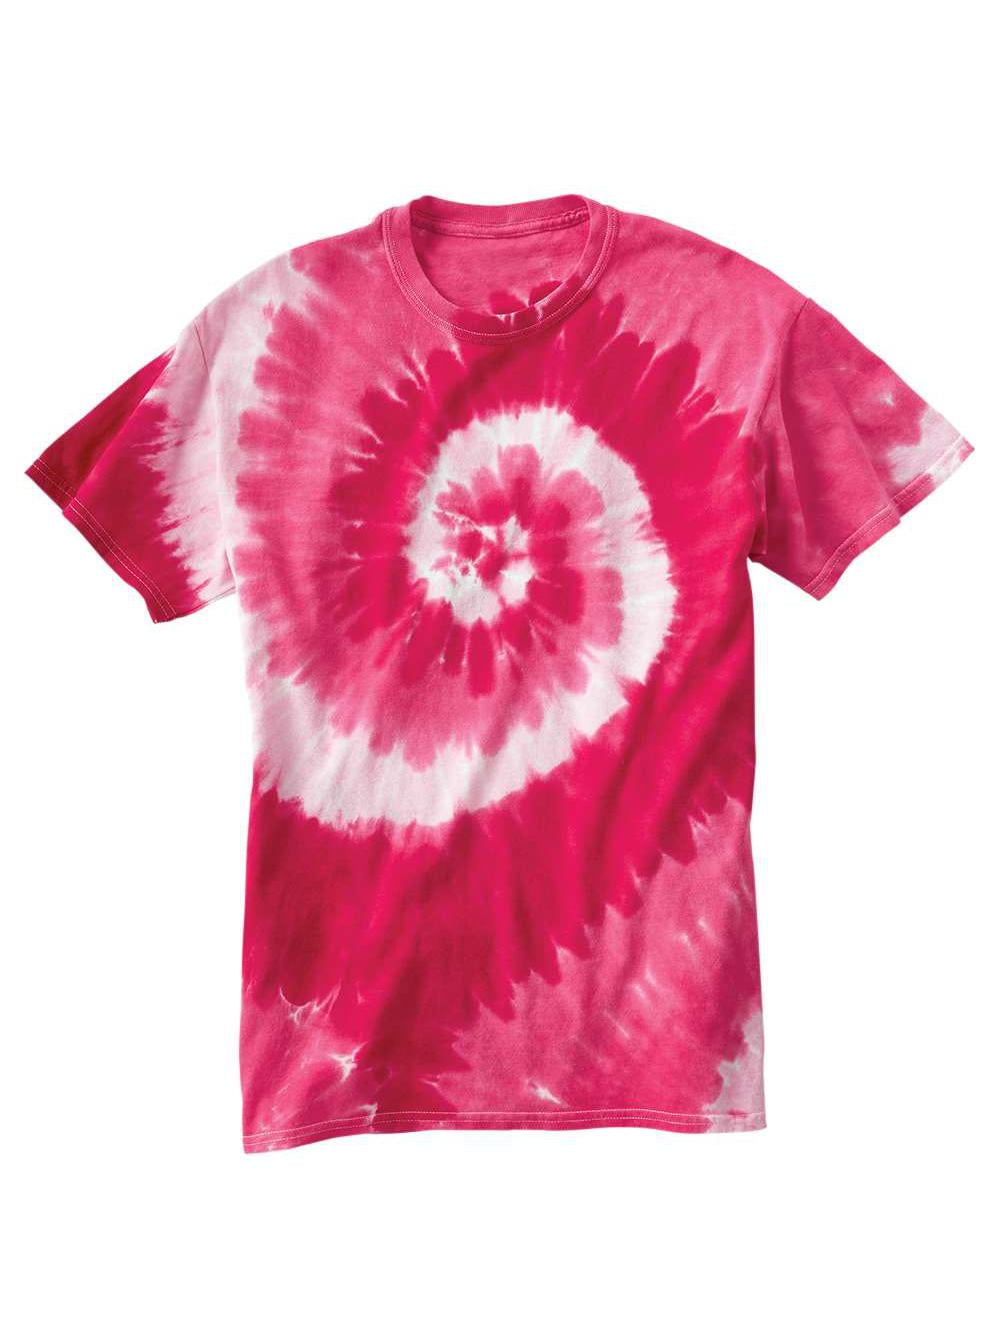 Dyenomite - Multi-Color Spiral Tie-Dyed T-Shirt - 200MS - Walmart.com